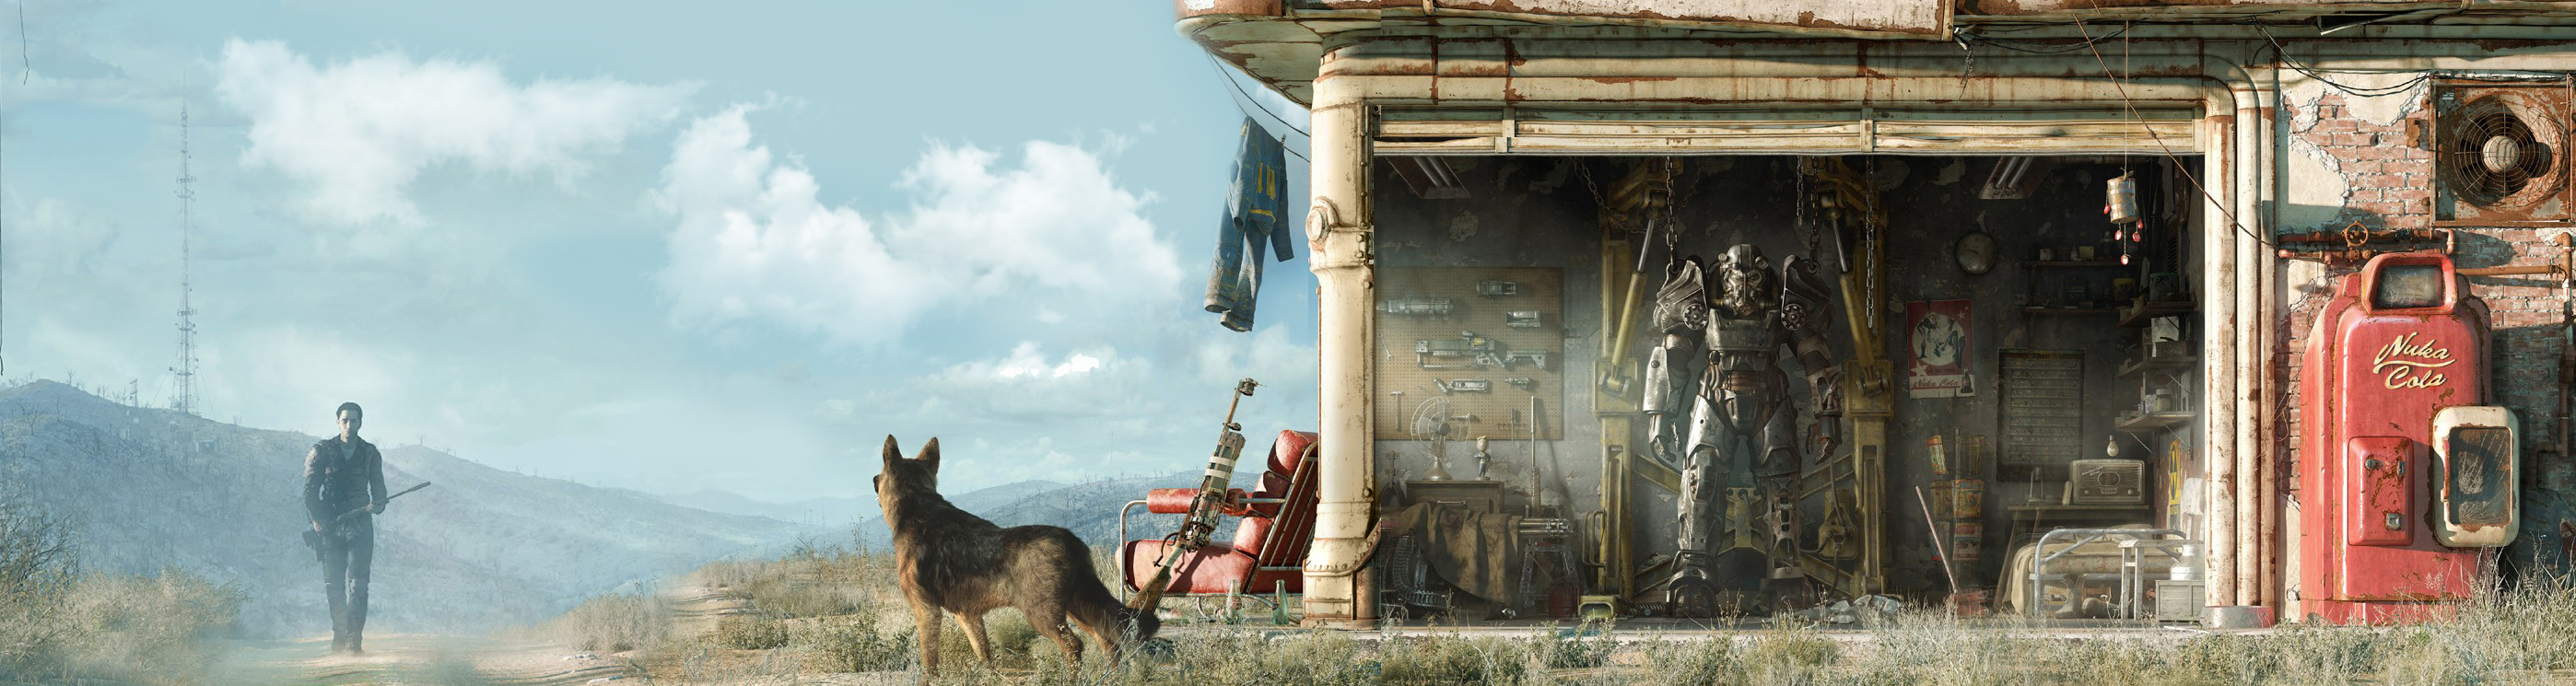 Fallout 4 screenshots 4k фото 94